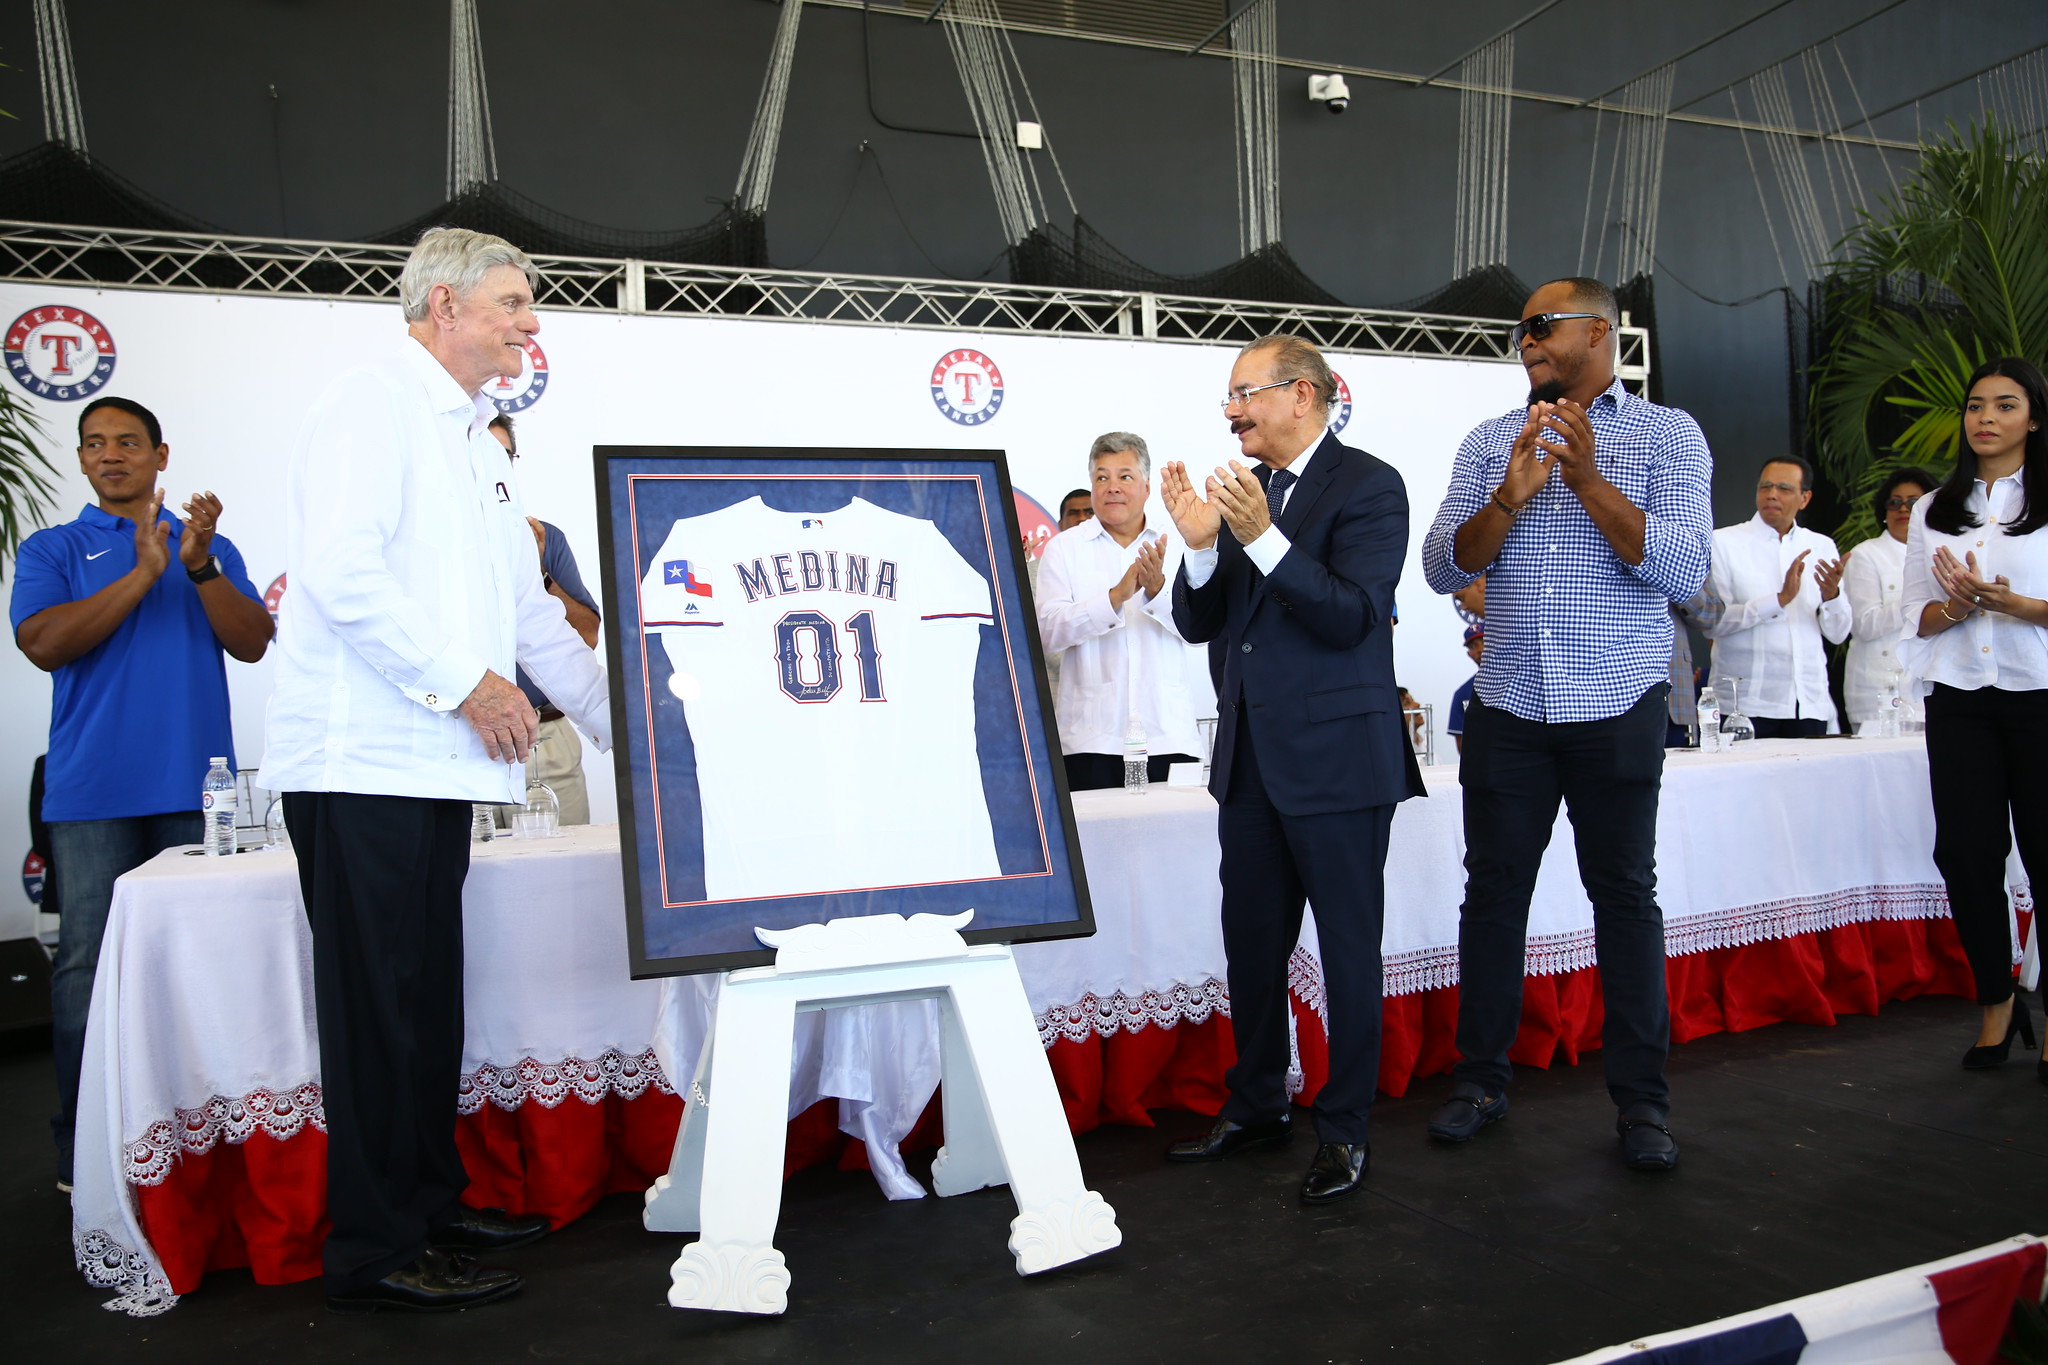 REPÚBLICA DOMINICANA: Presidente Danilo Medina asiste a inicio operaciones de academia de béisbol Rangers de Texas, en Boca Chica